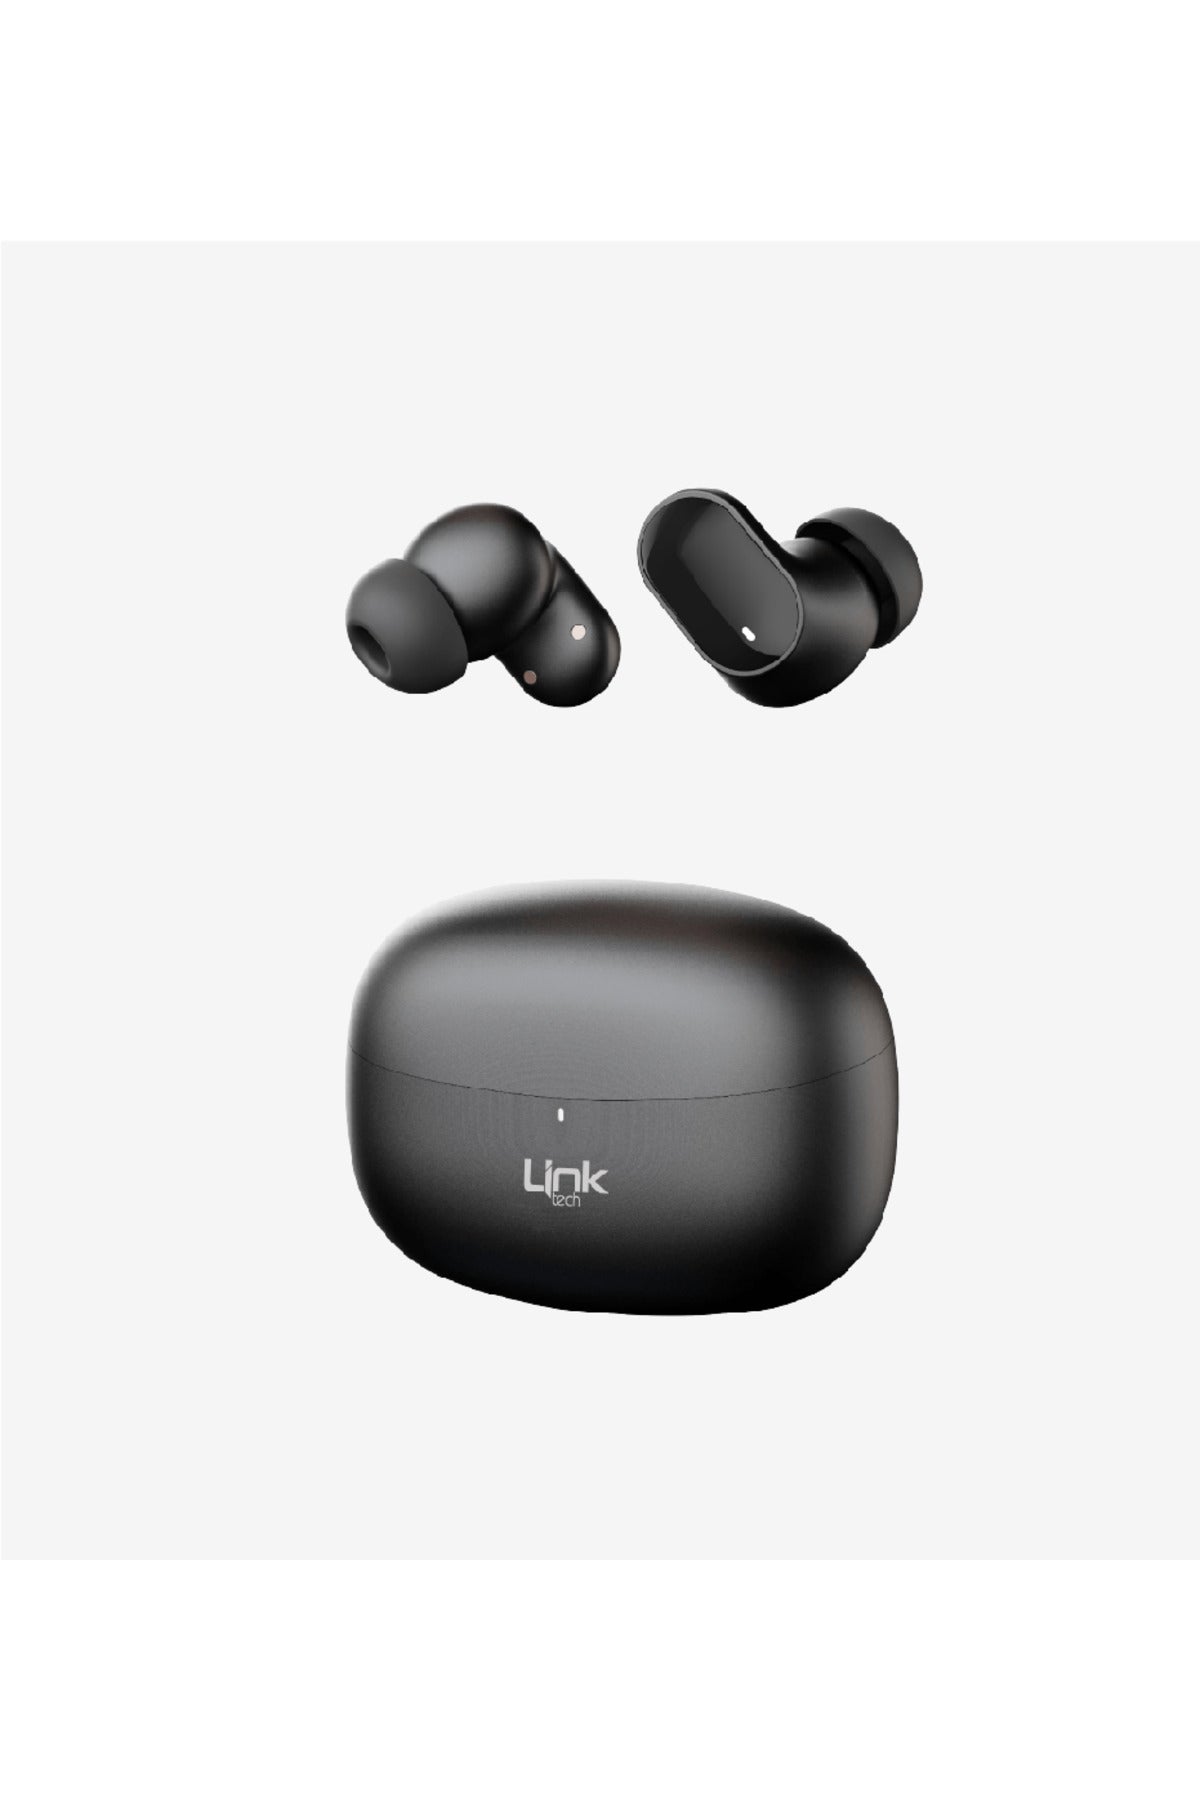 TW16 LinkPods Stereo Bluetooth Kulaklık, Kablosuz Kulaklık, Şık Kulaklık.